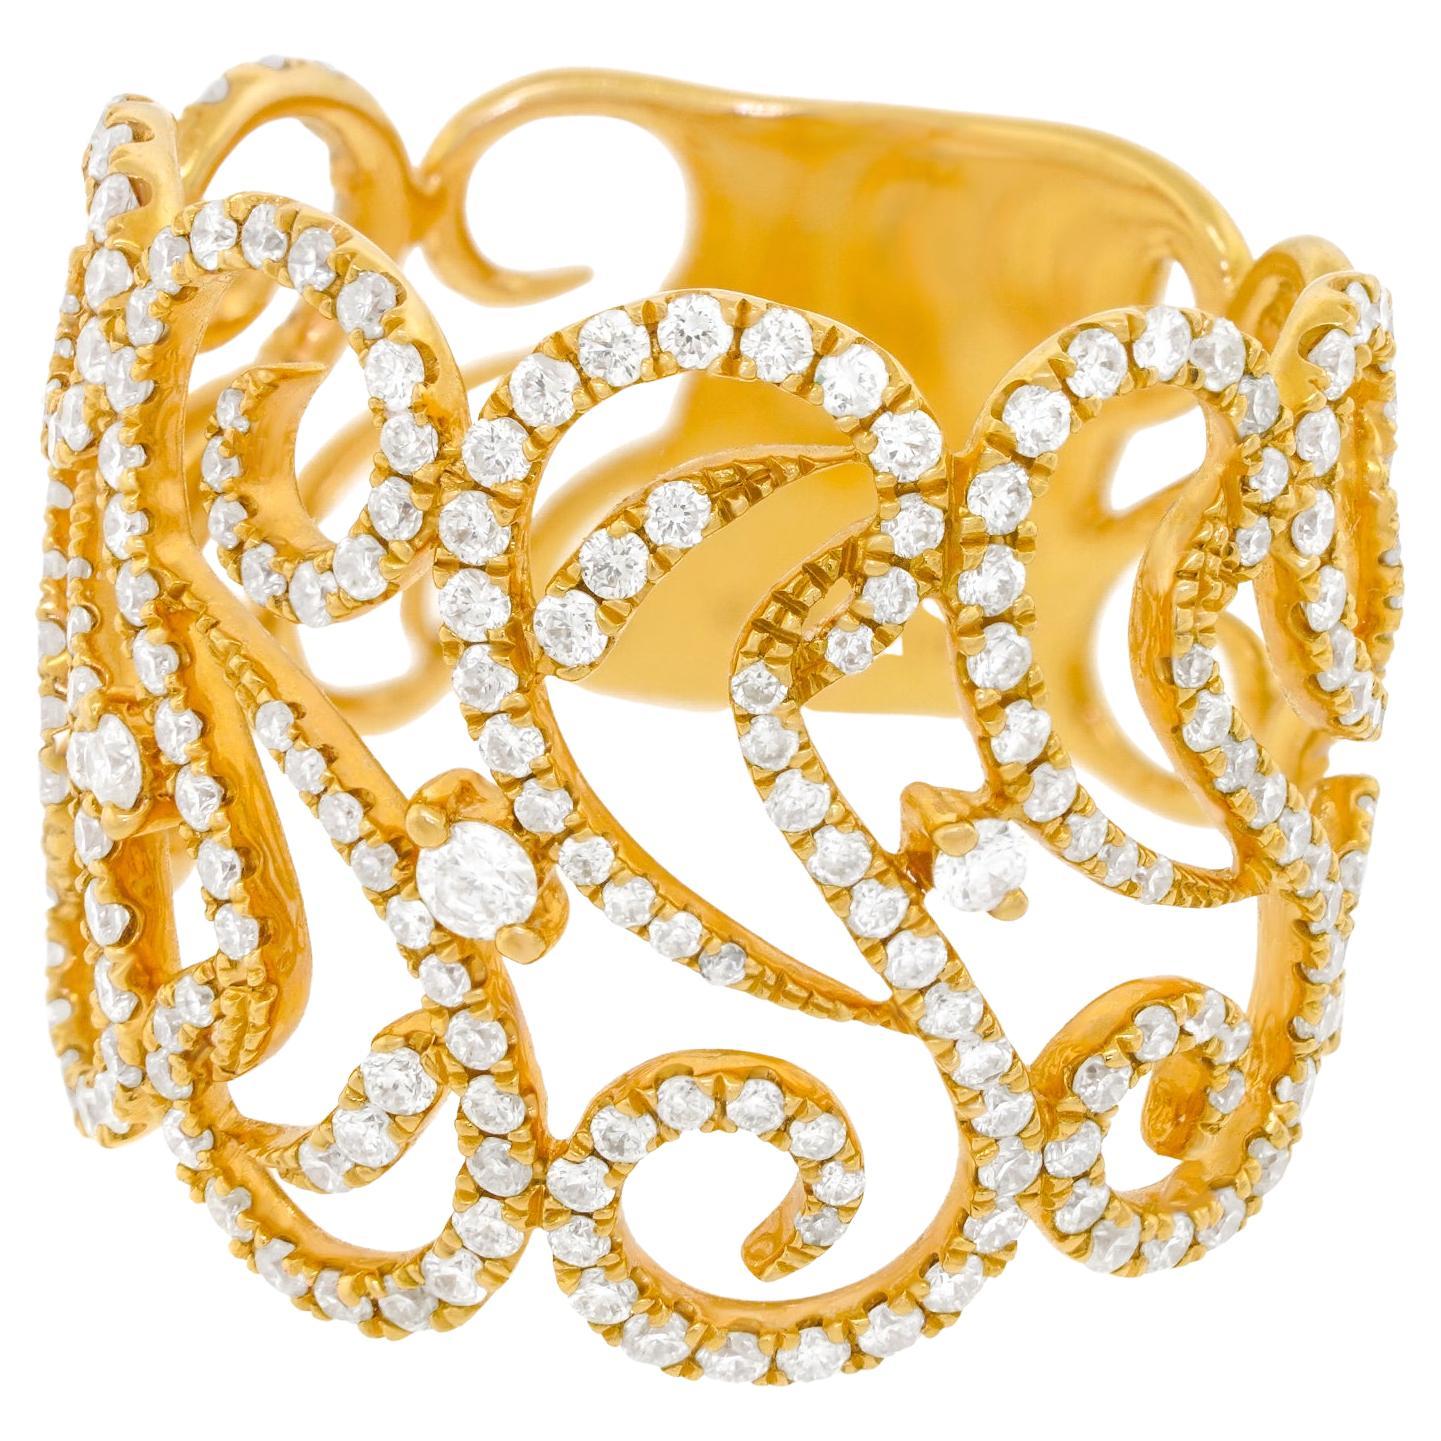 Parisian 18k Gold Fantasy Ring For Sale